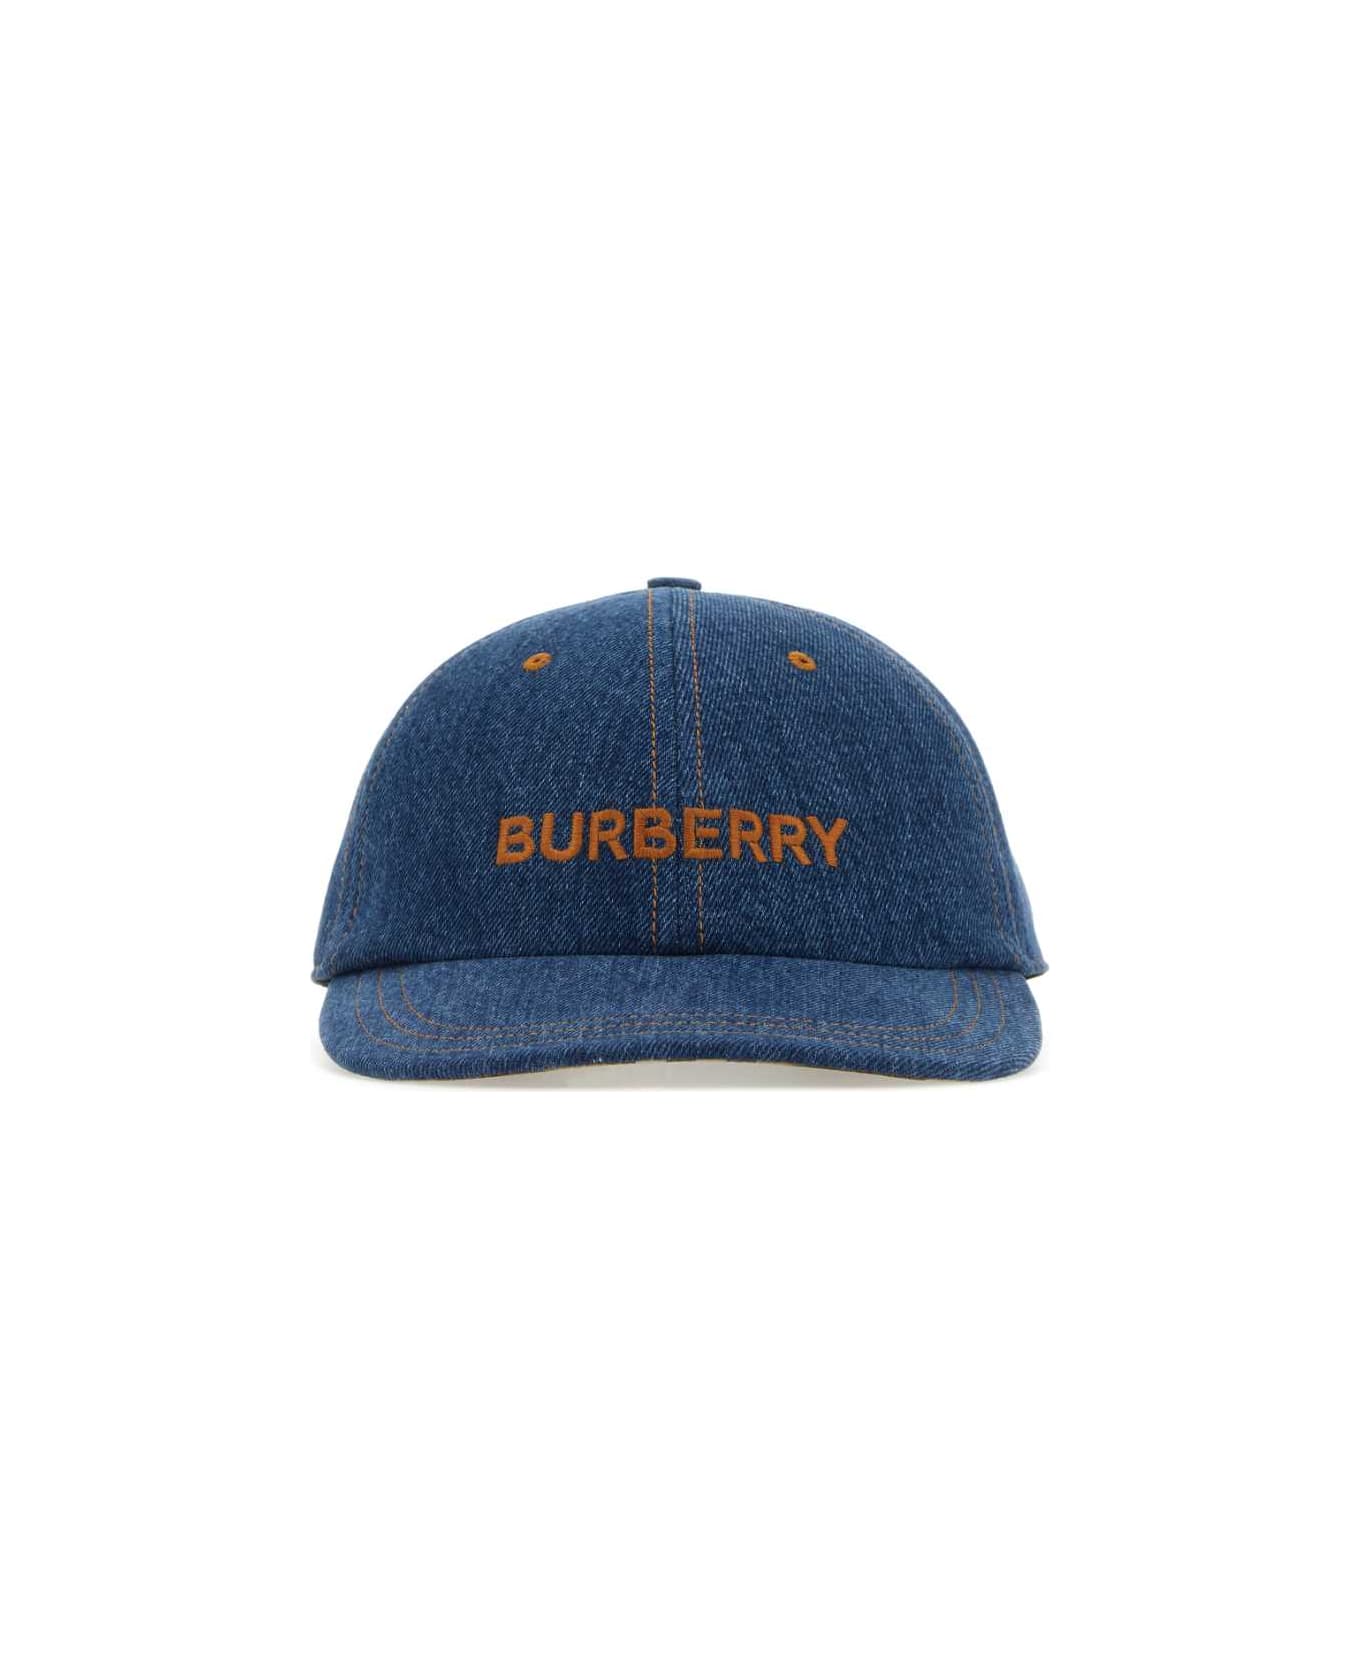 Burberry Denim Baseball Cap - WASHEDINDIGO ヘアアクセサリー